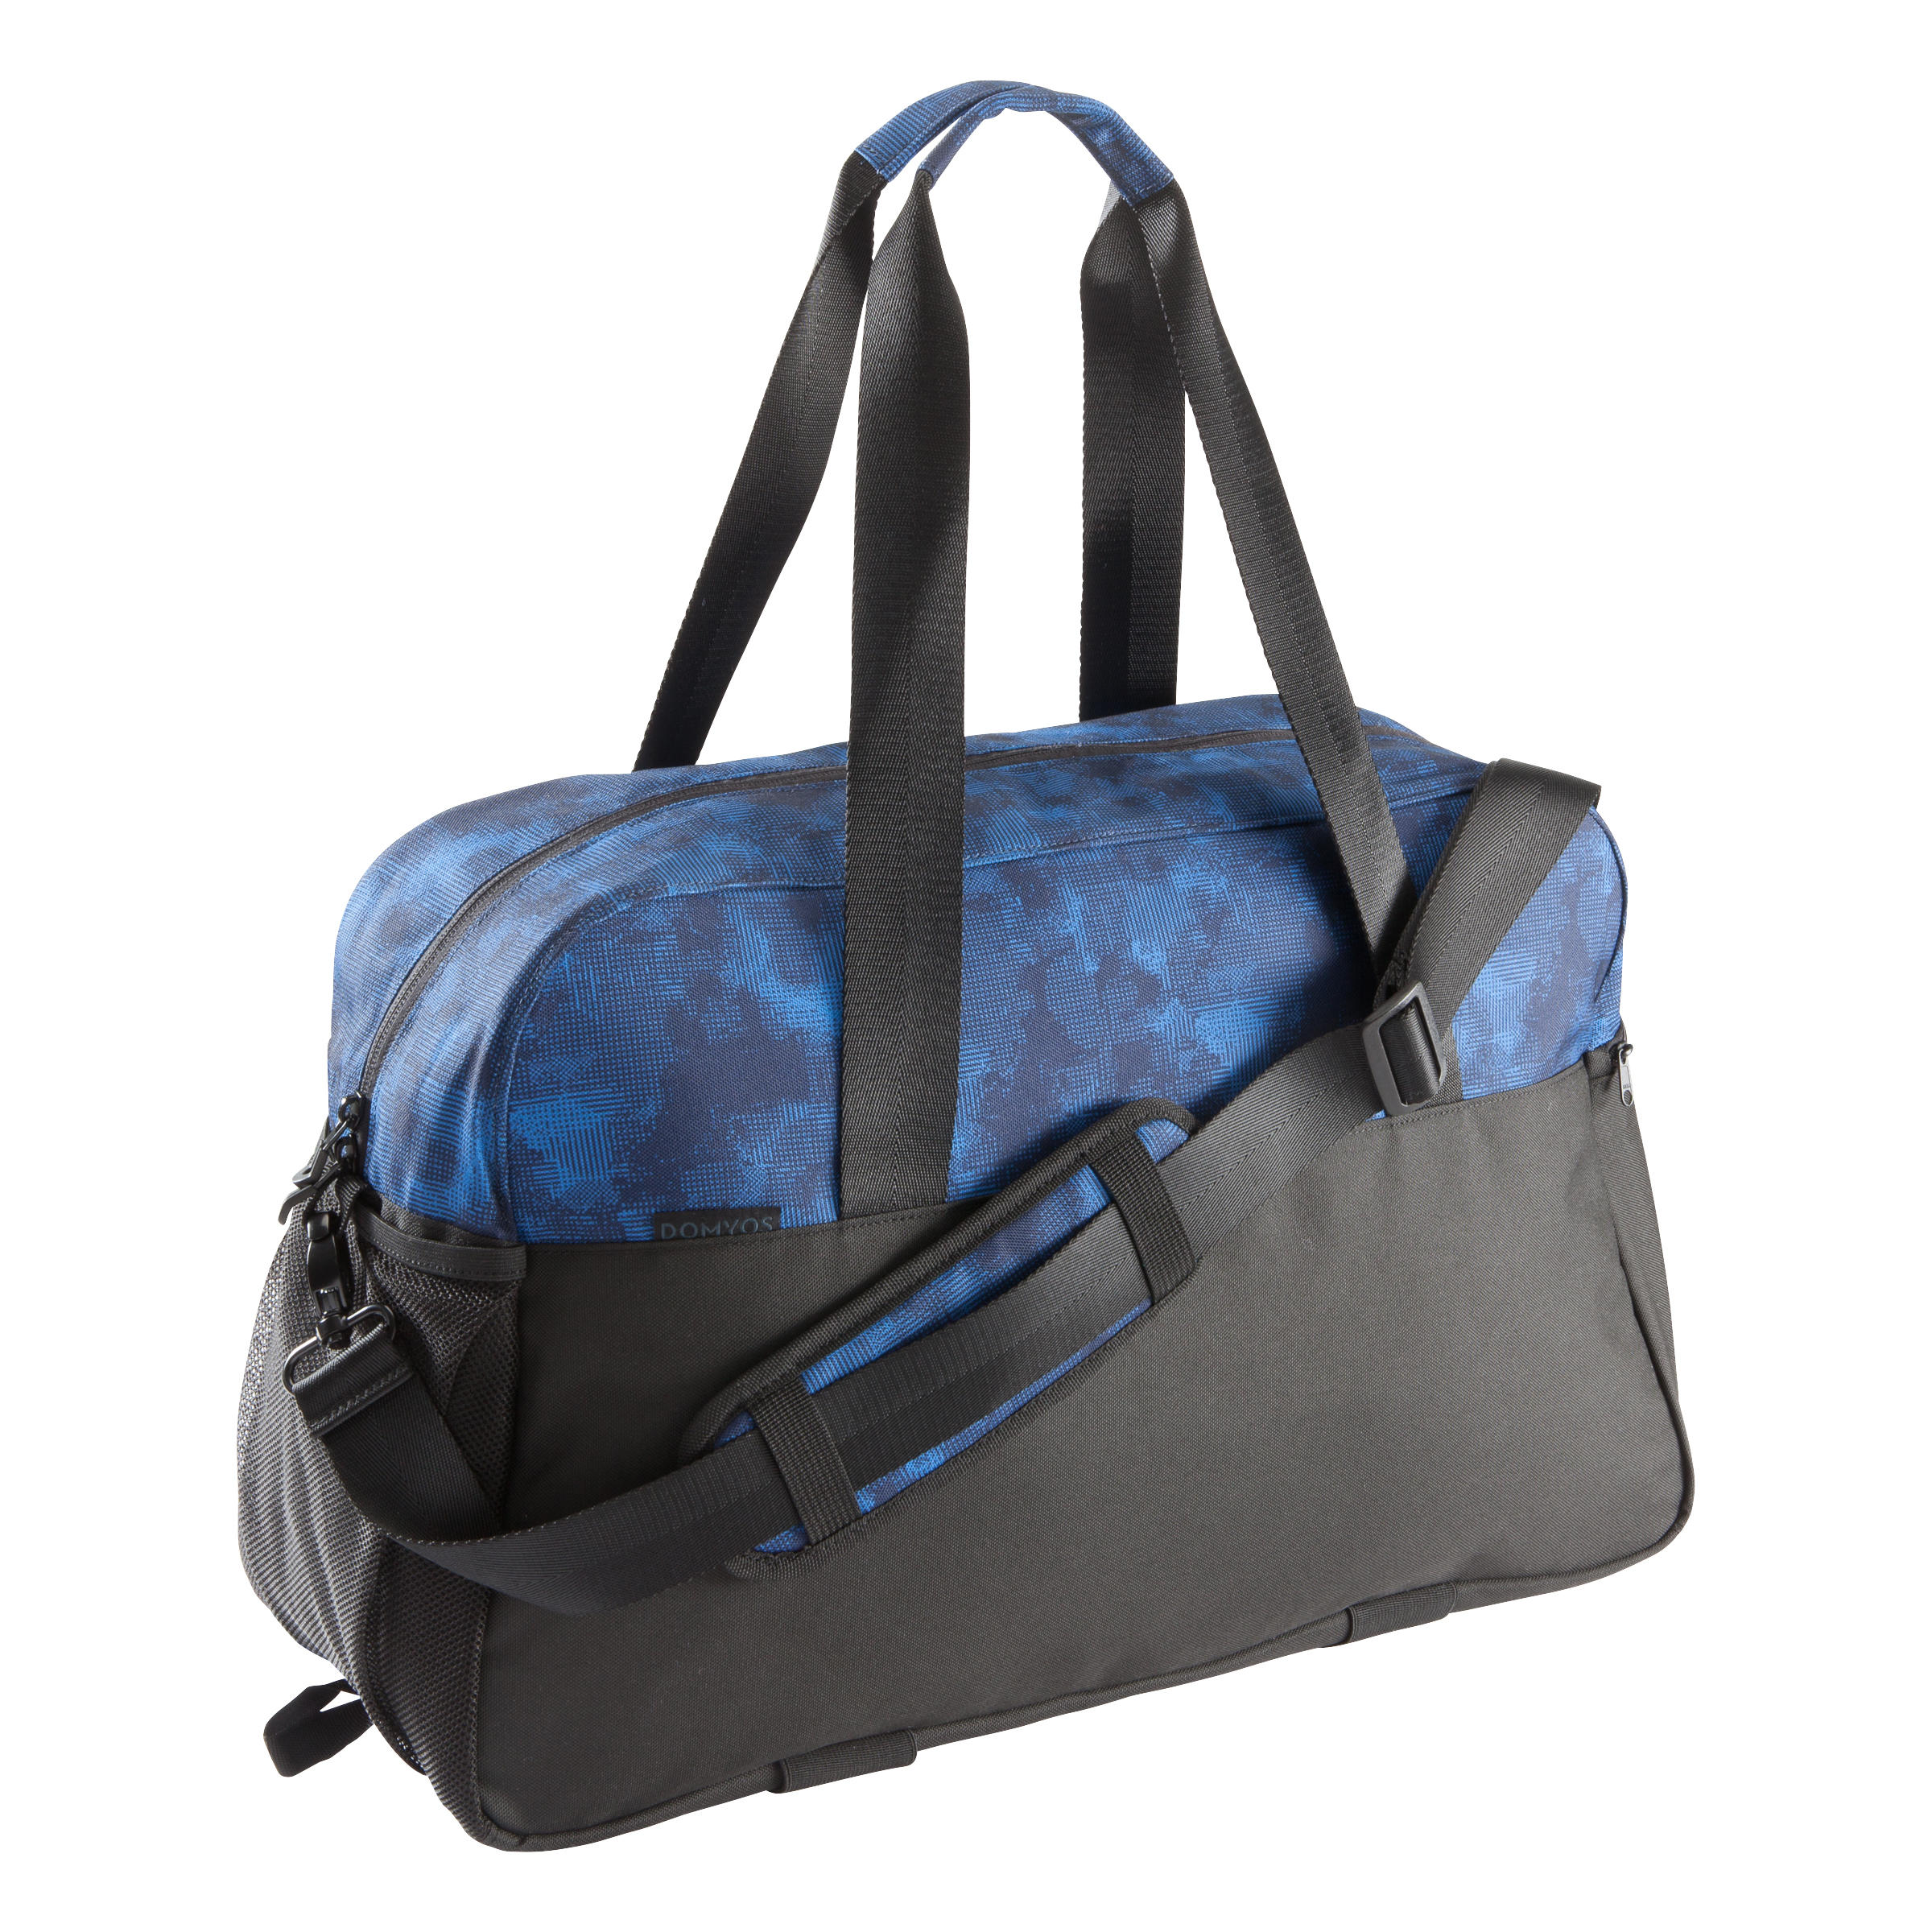 Fitness Duffle Bag 30L - Blue/Black